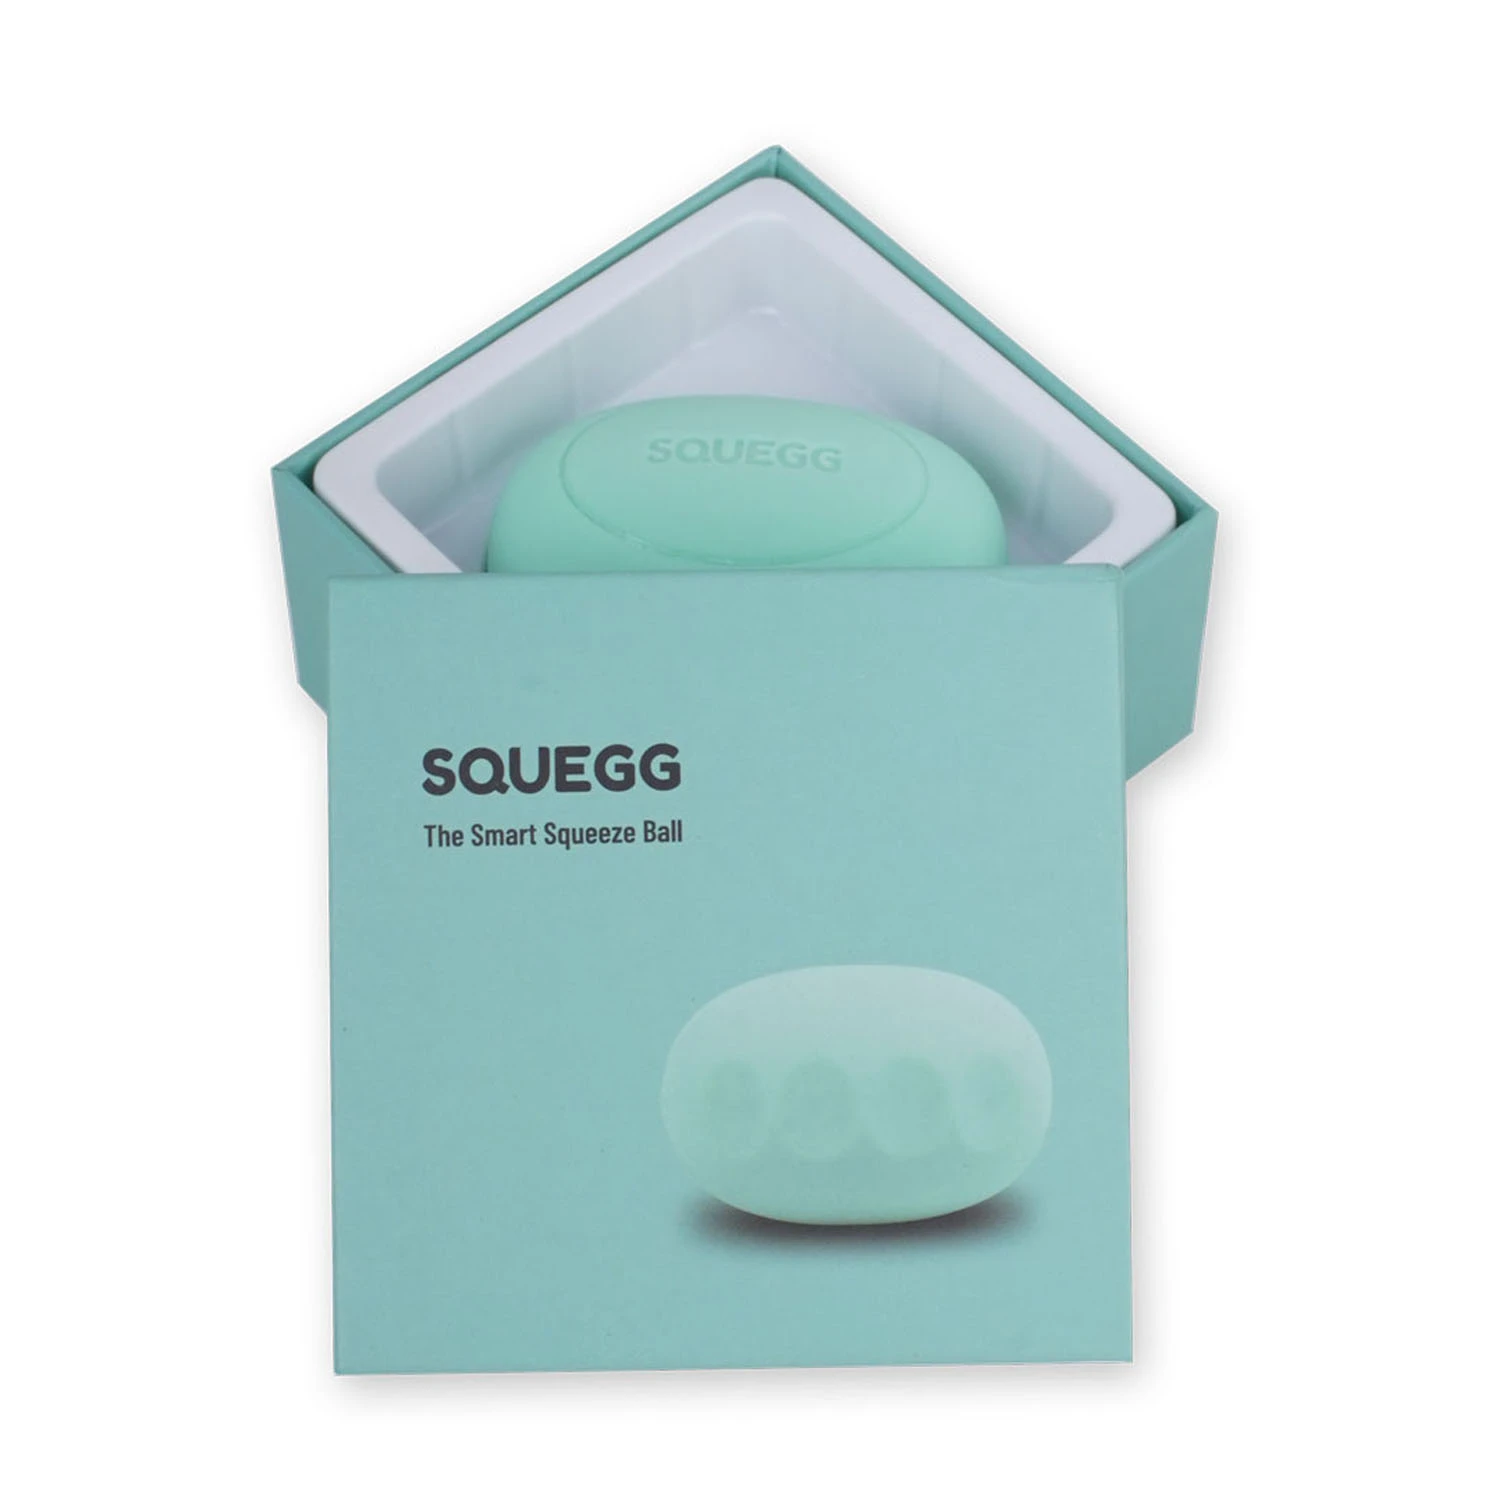 Squegg – Digital Grip Strengthener